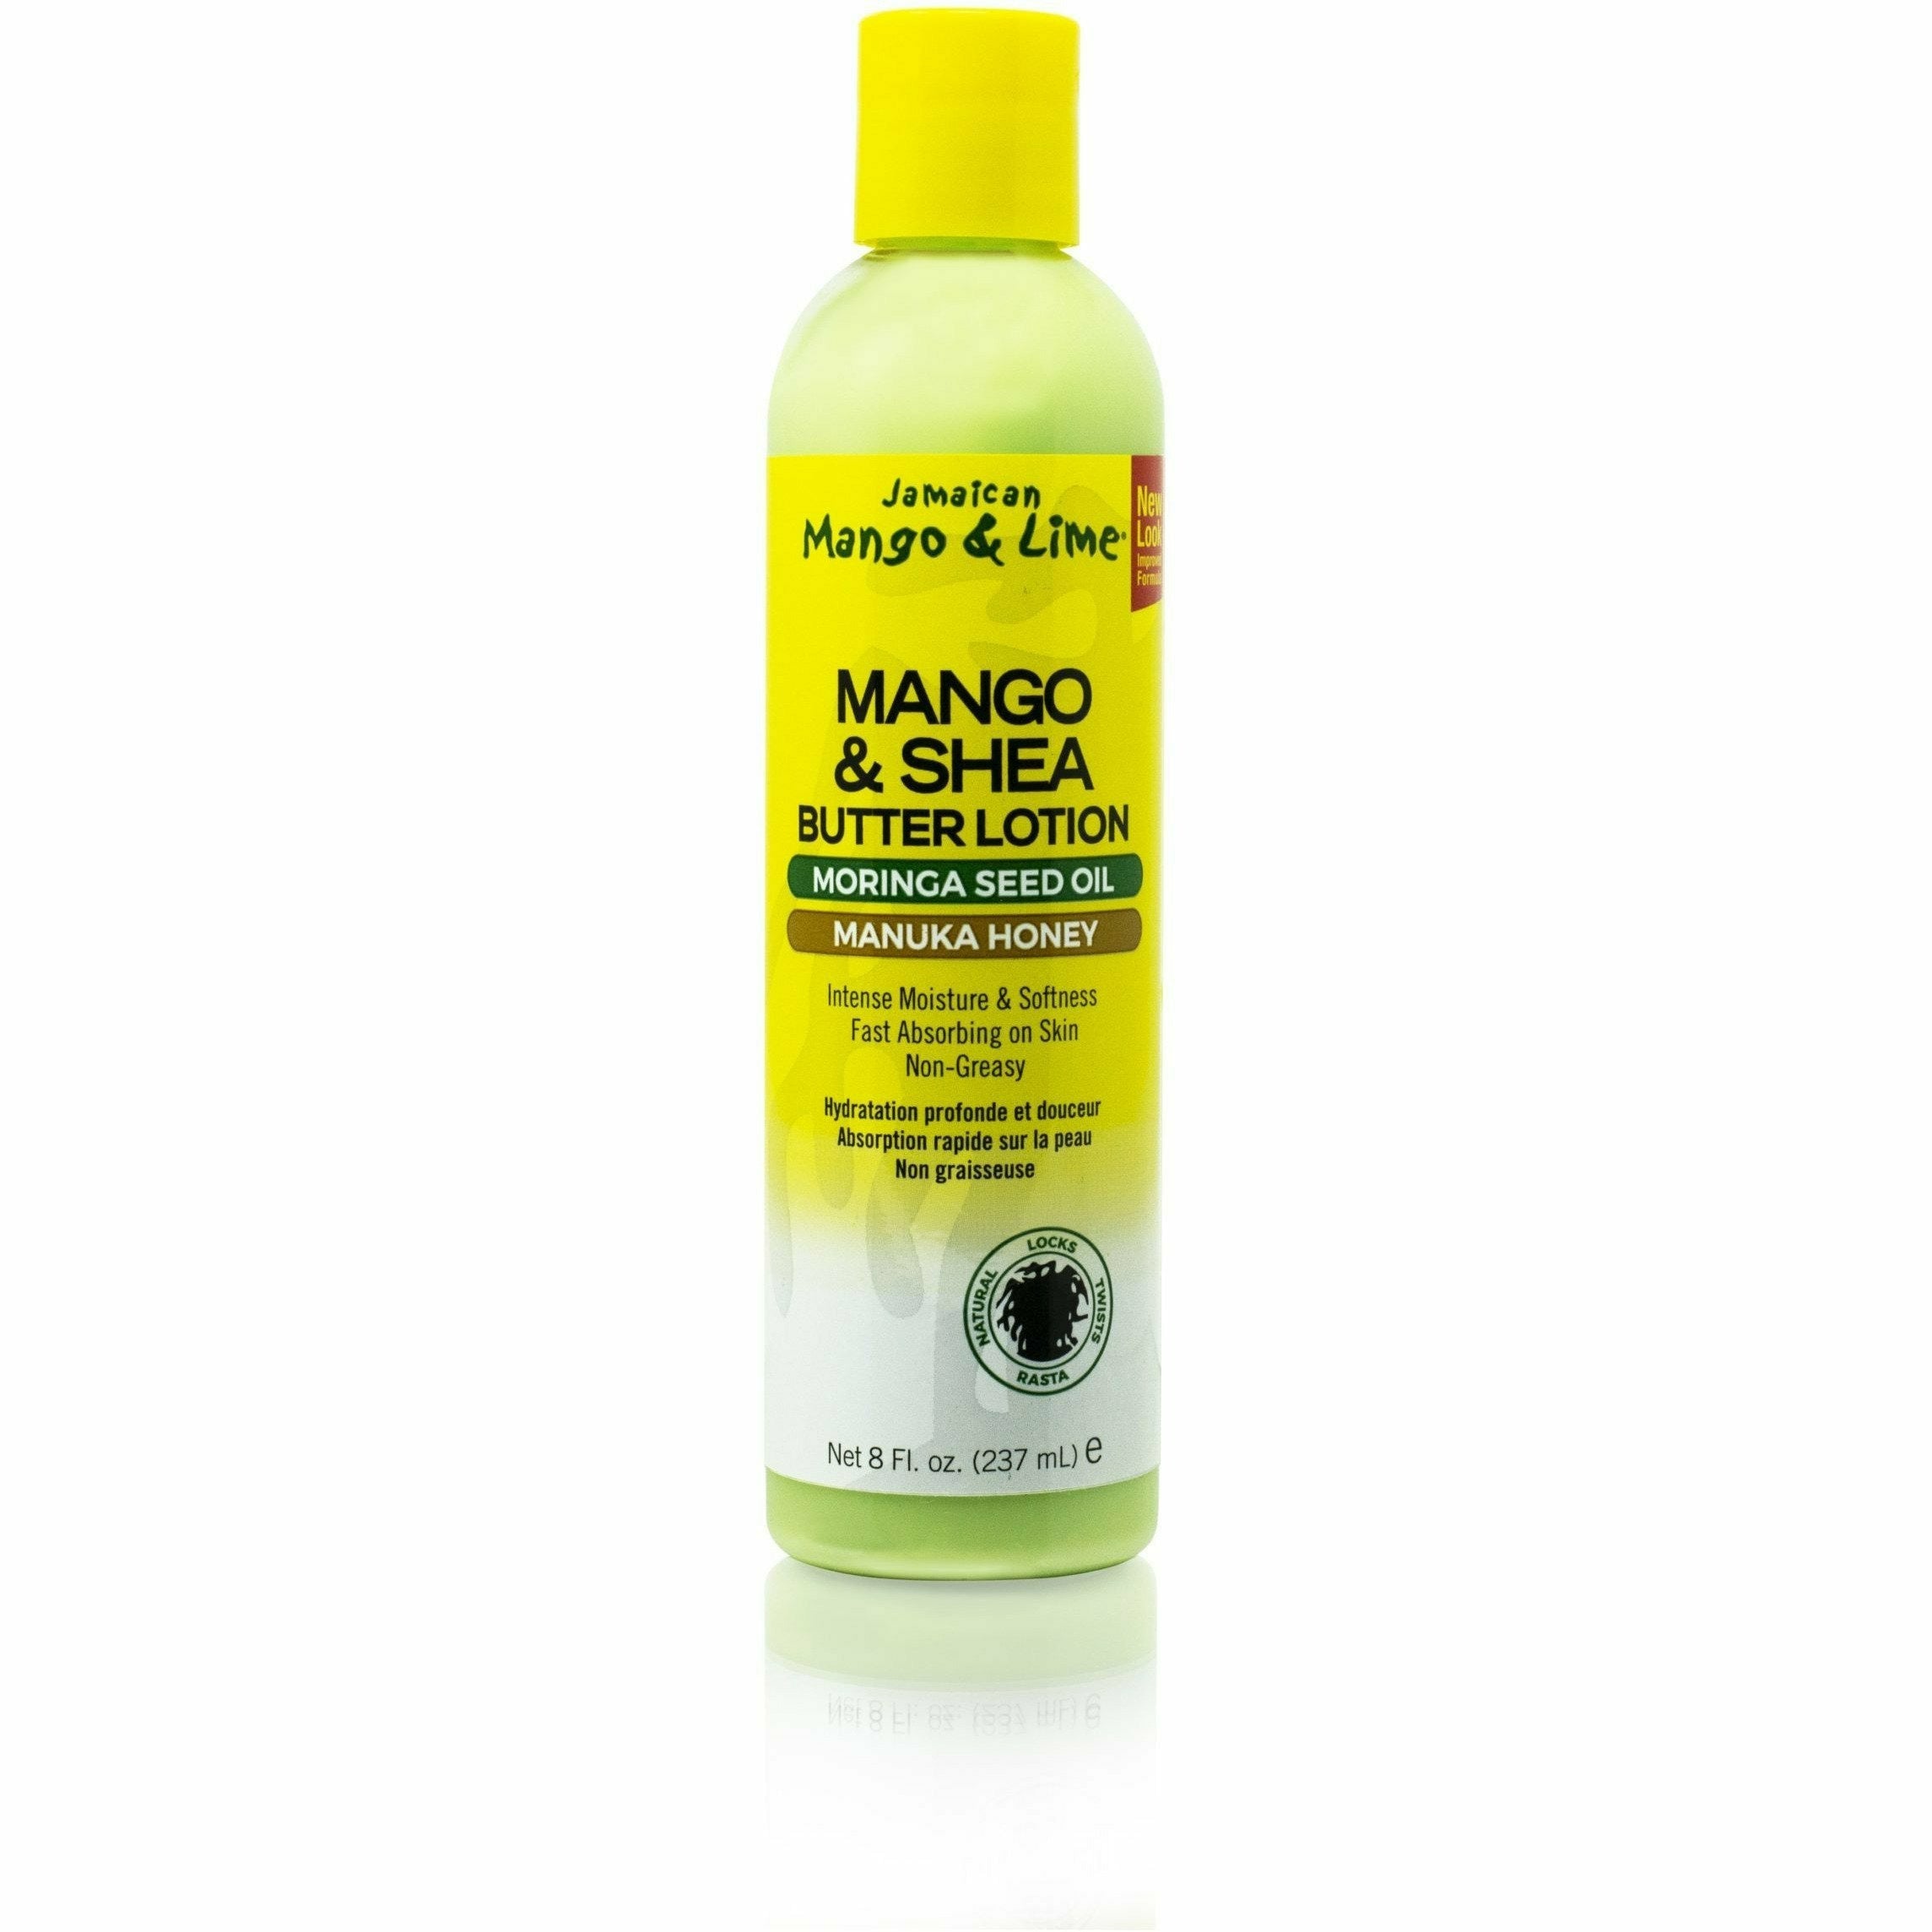 Jamaican Mango & Lime: Mango and Shea Butter Body Lotion